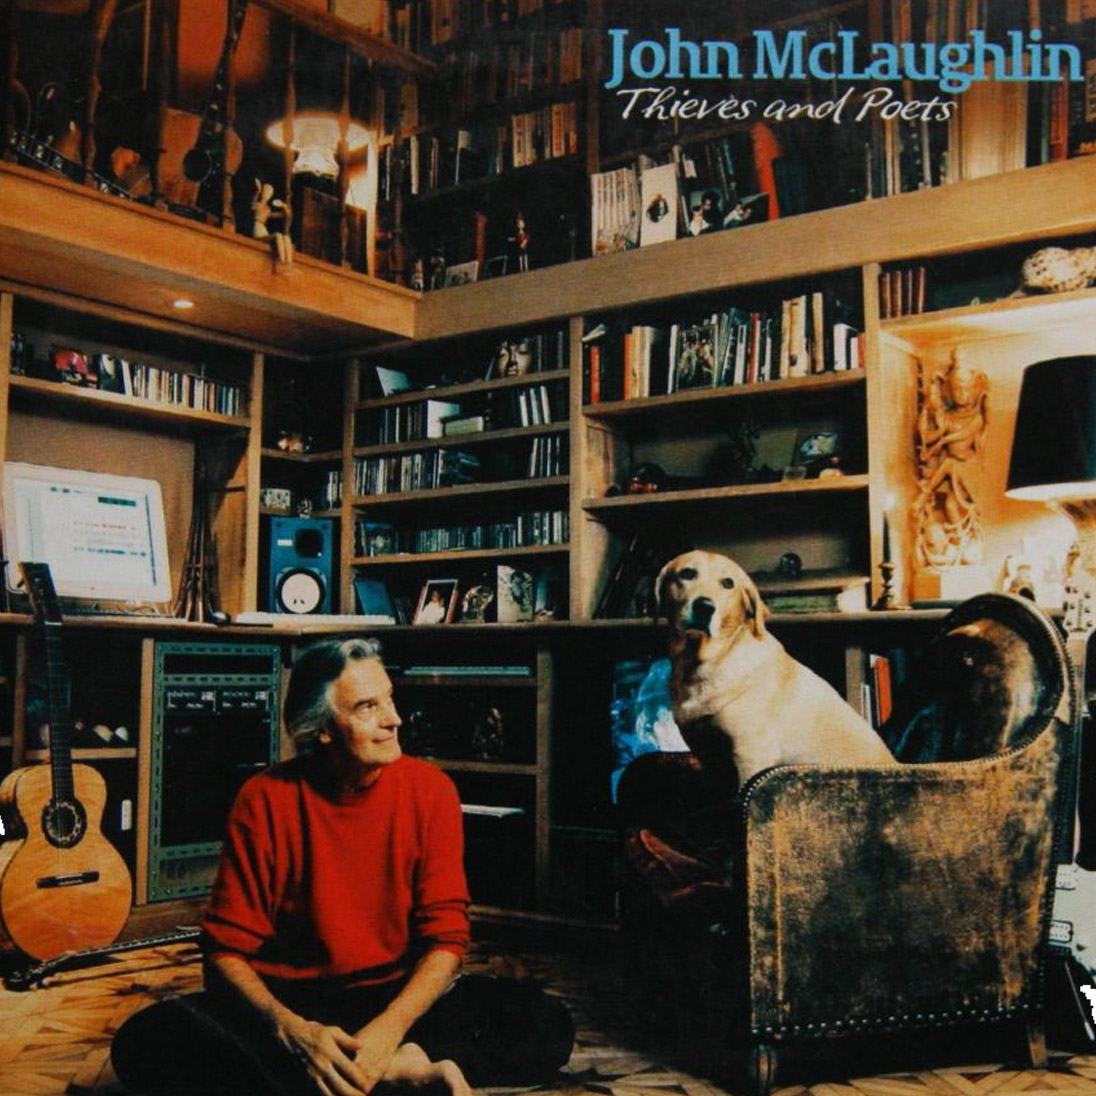 John McLaughlin - Thieves Аnd Poets (2003)